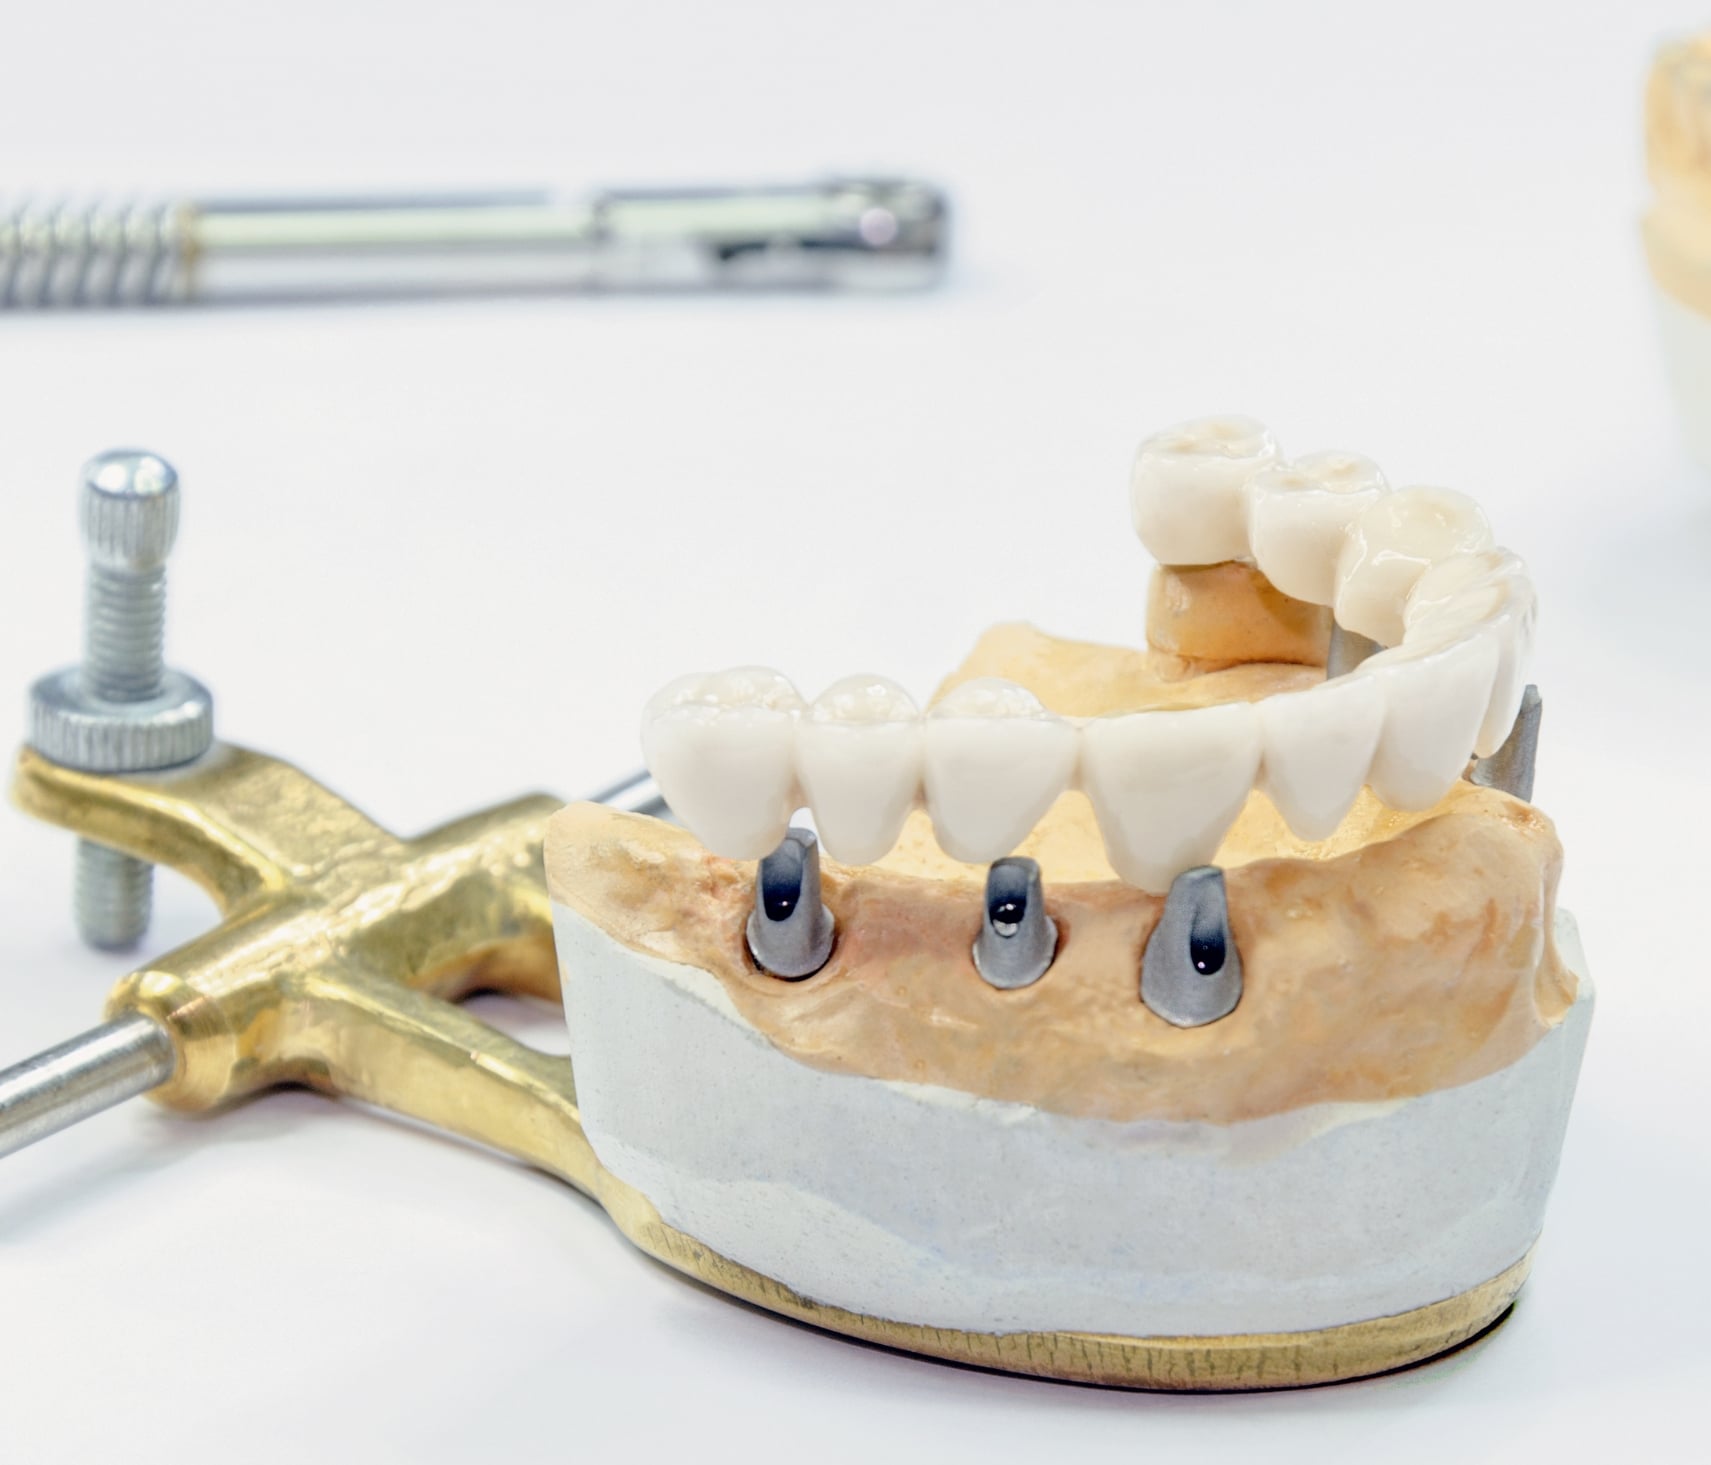 Ready to Regain Full Dental Implants Function?